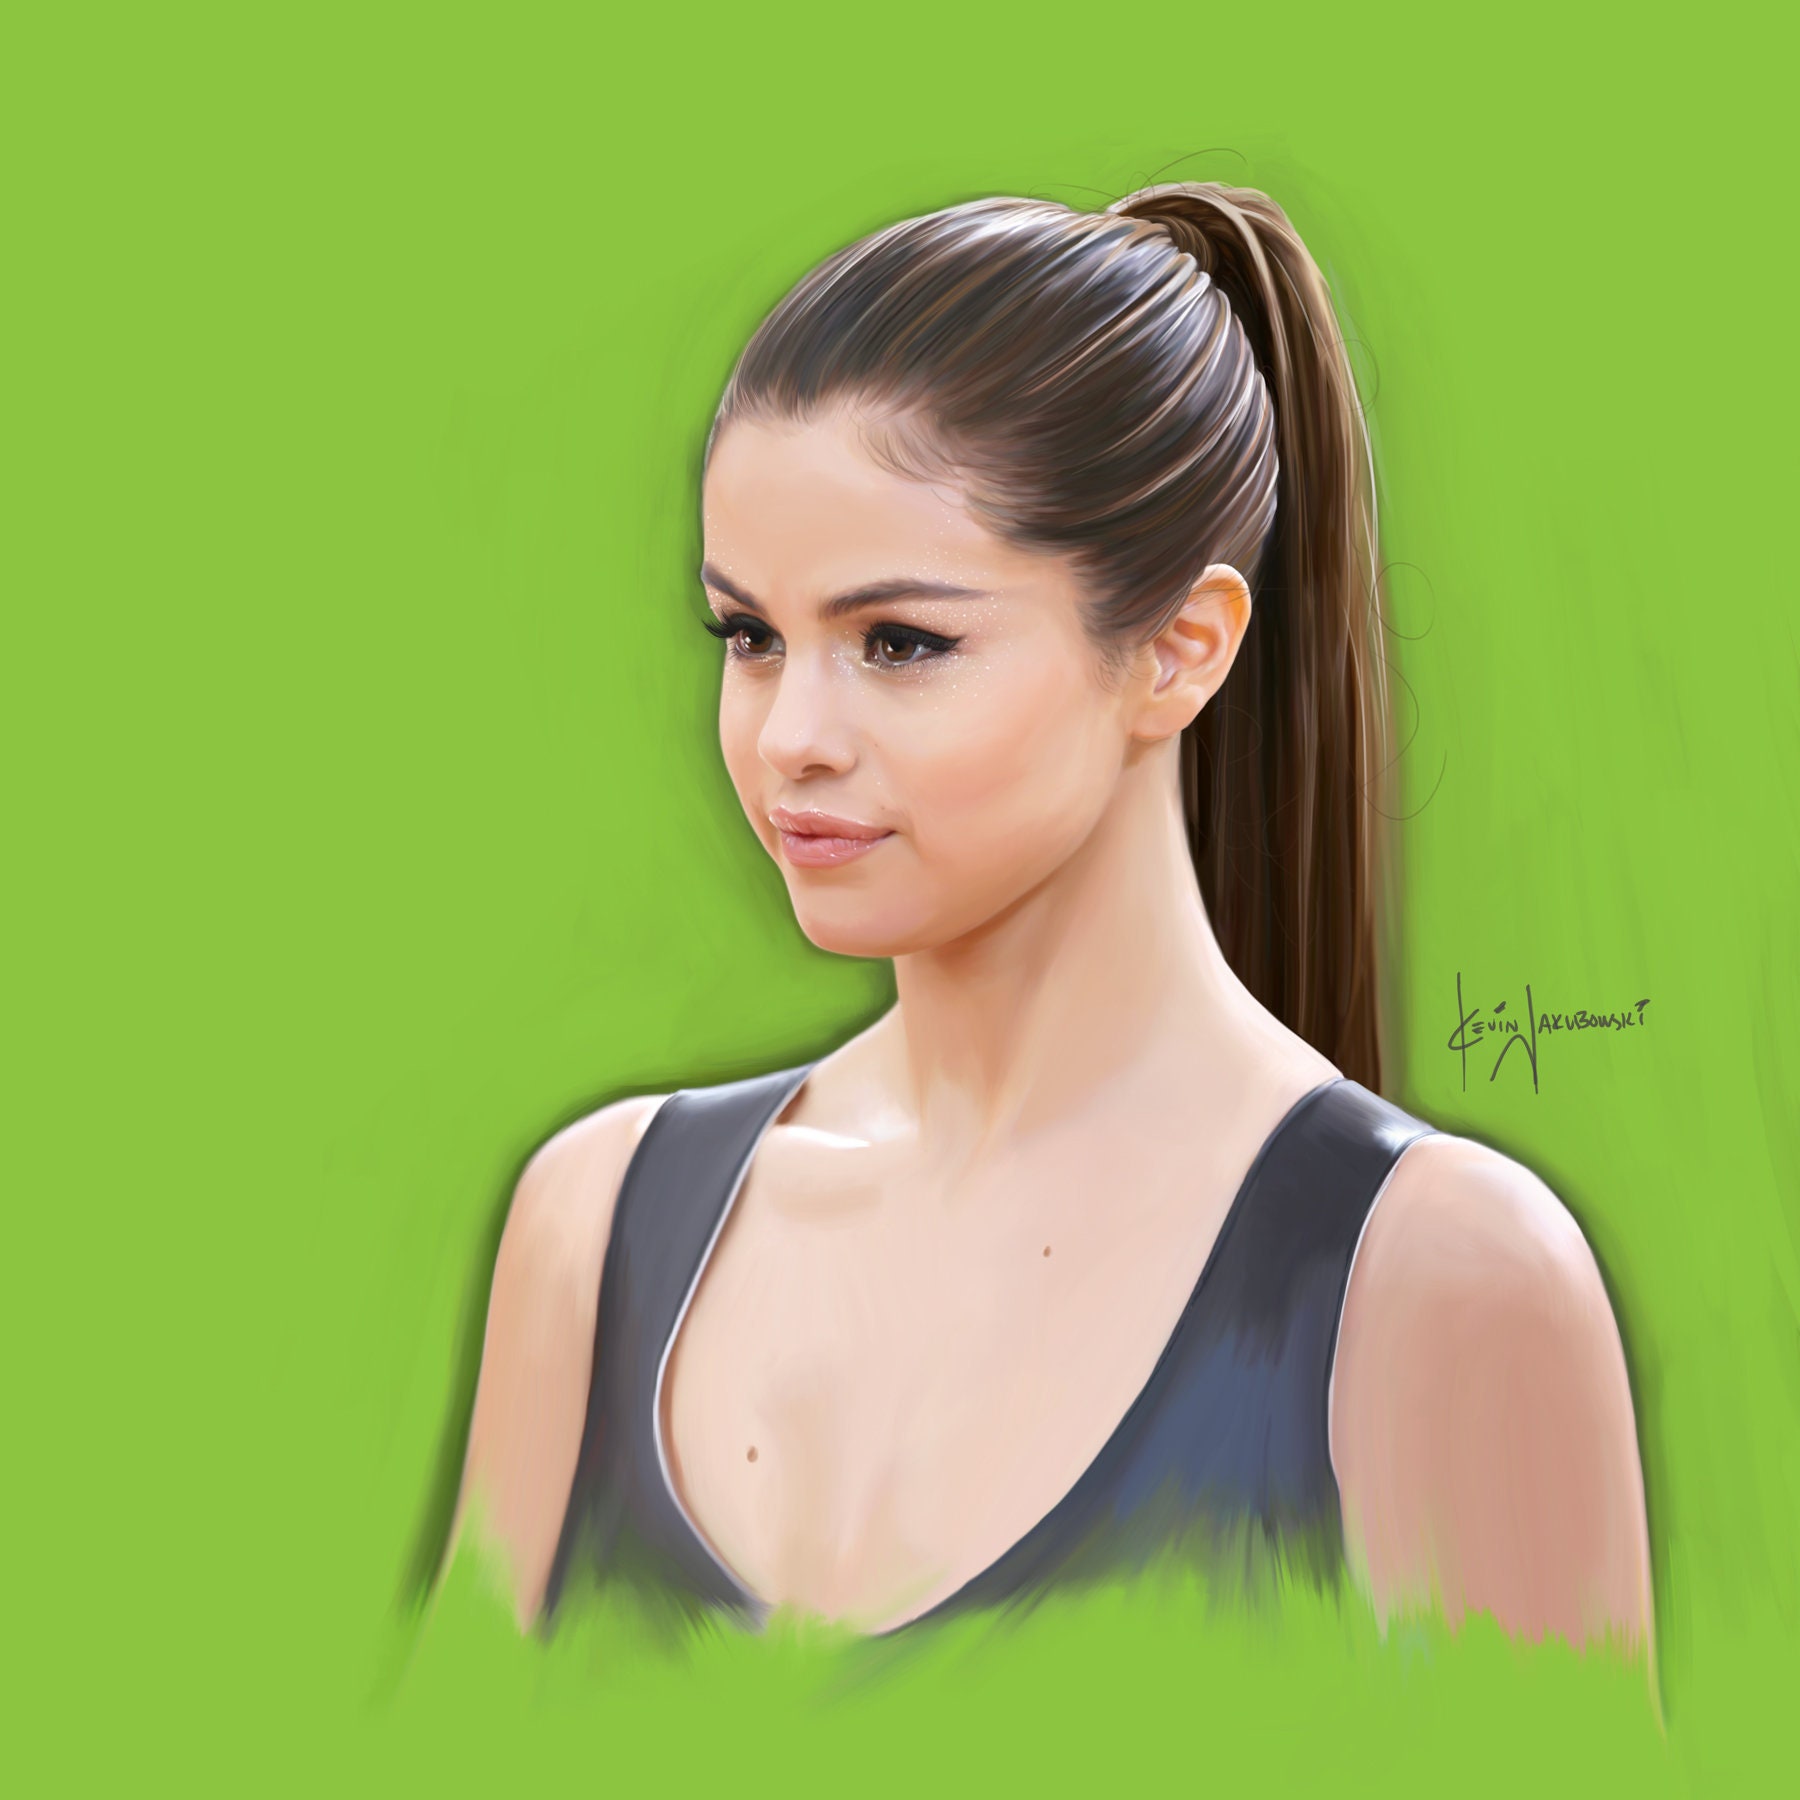 Selena green gomez